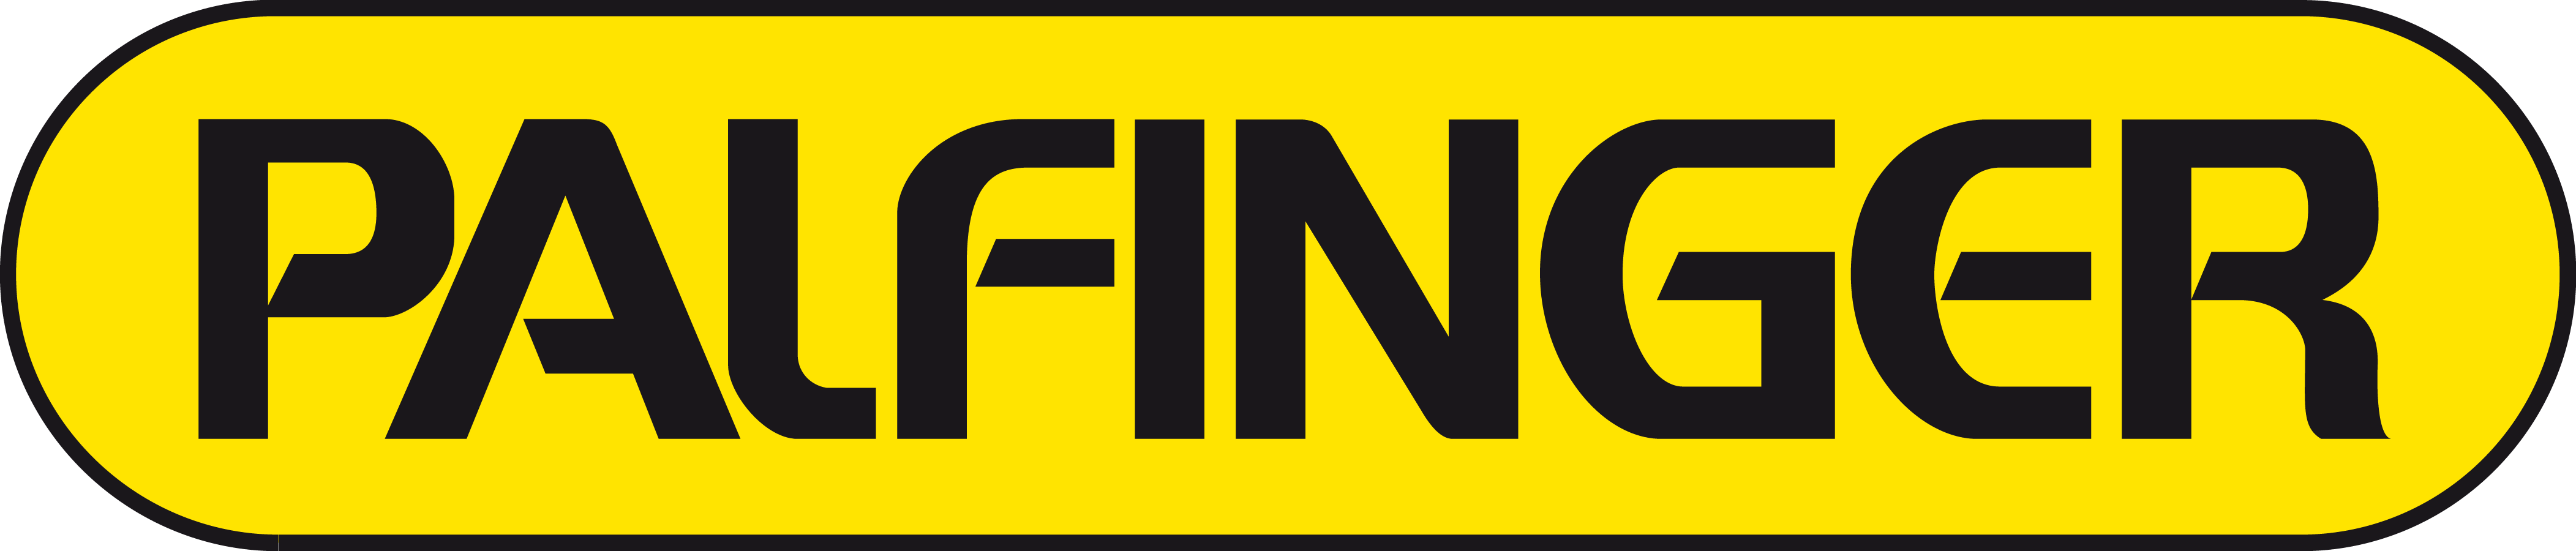 20081004101118Palfinger logo